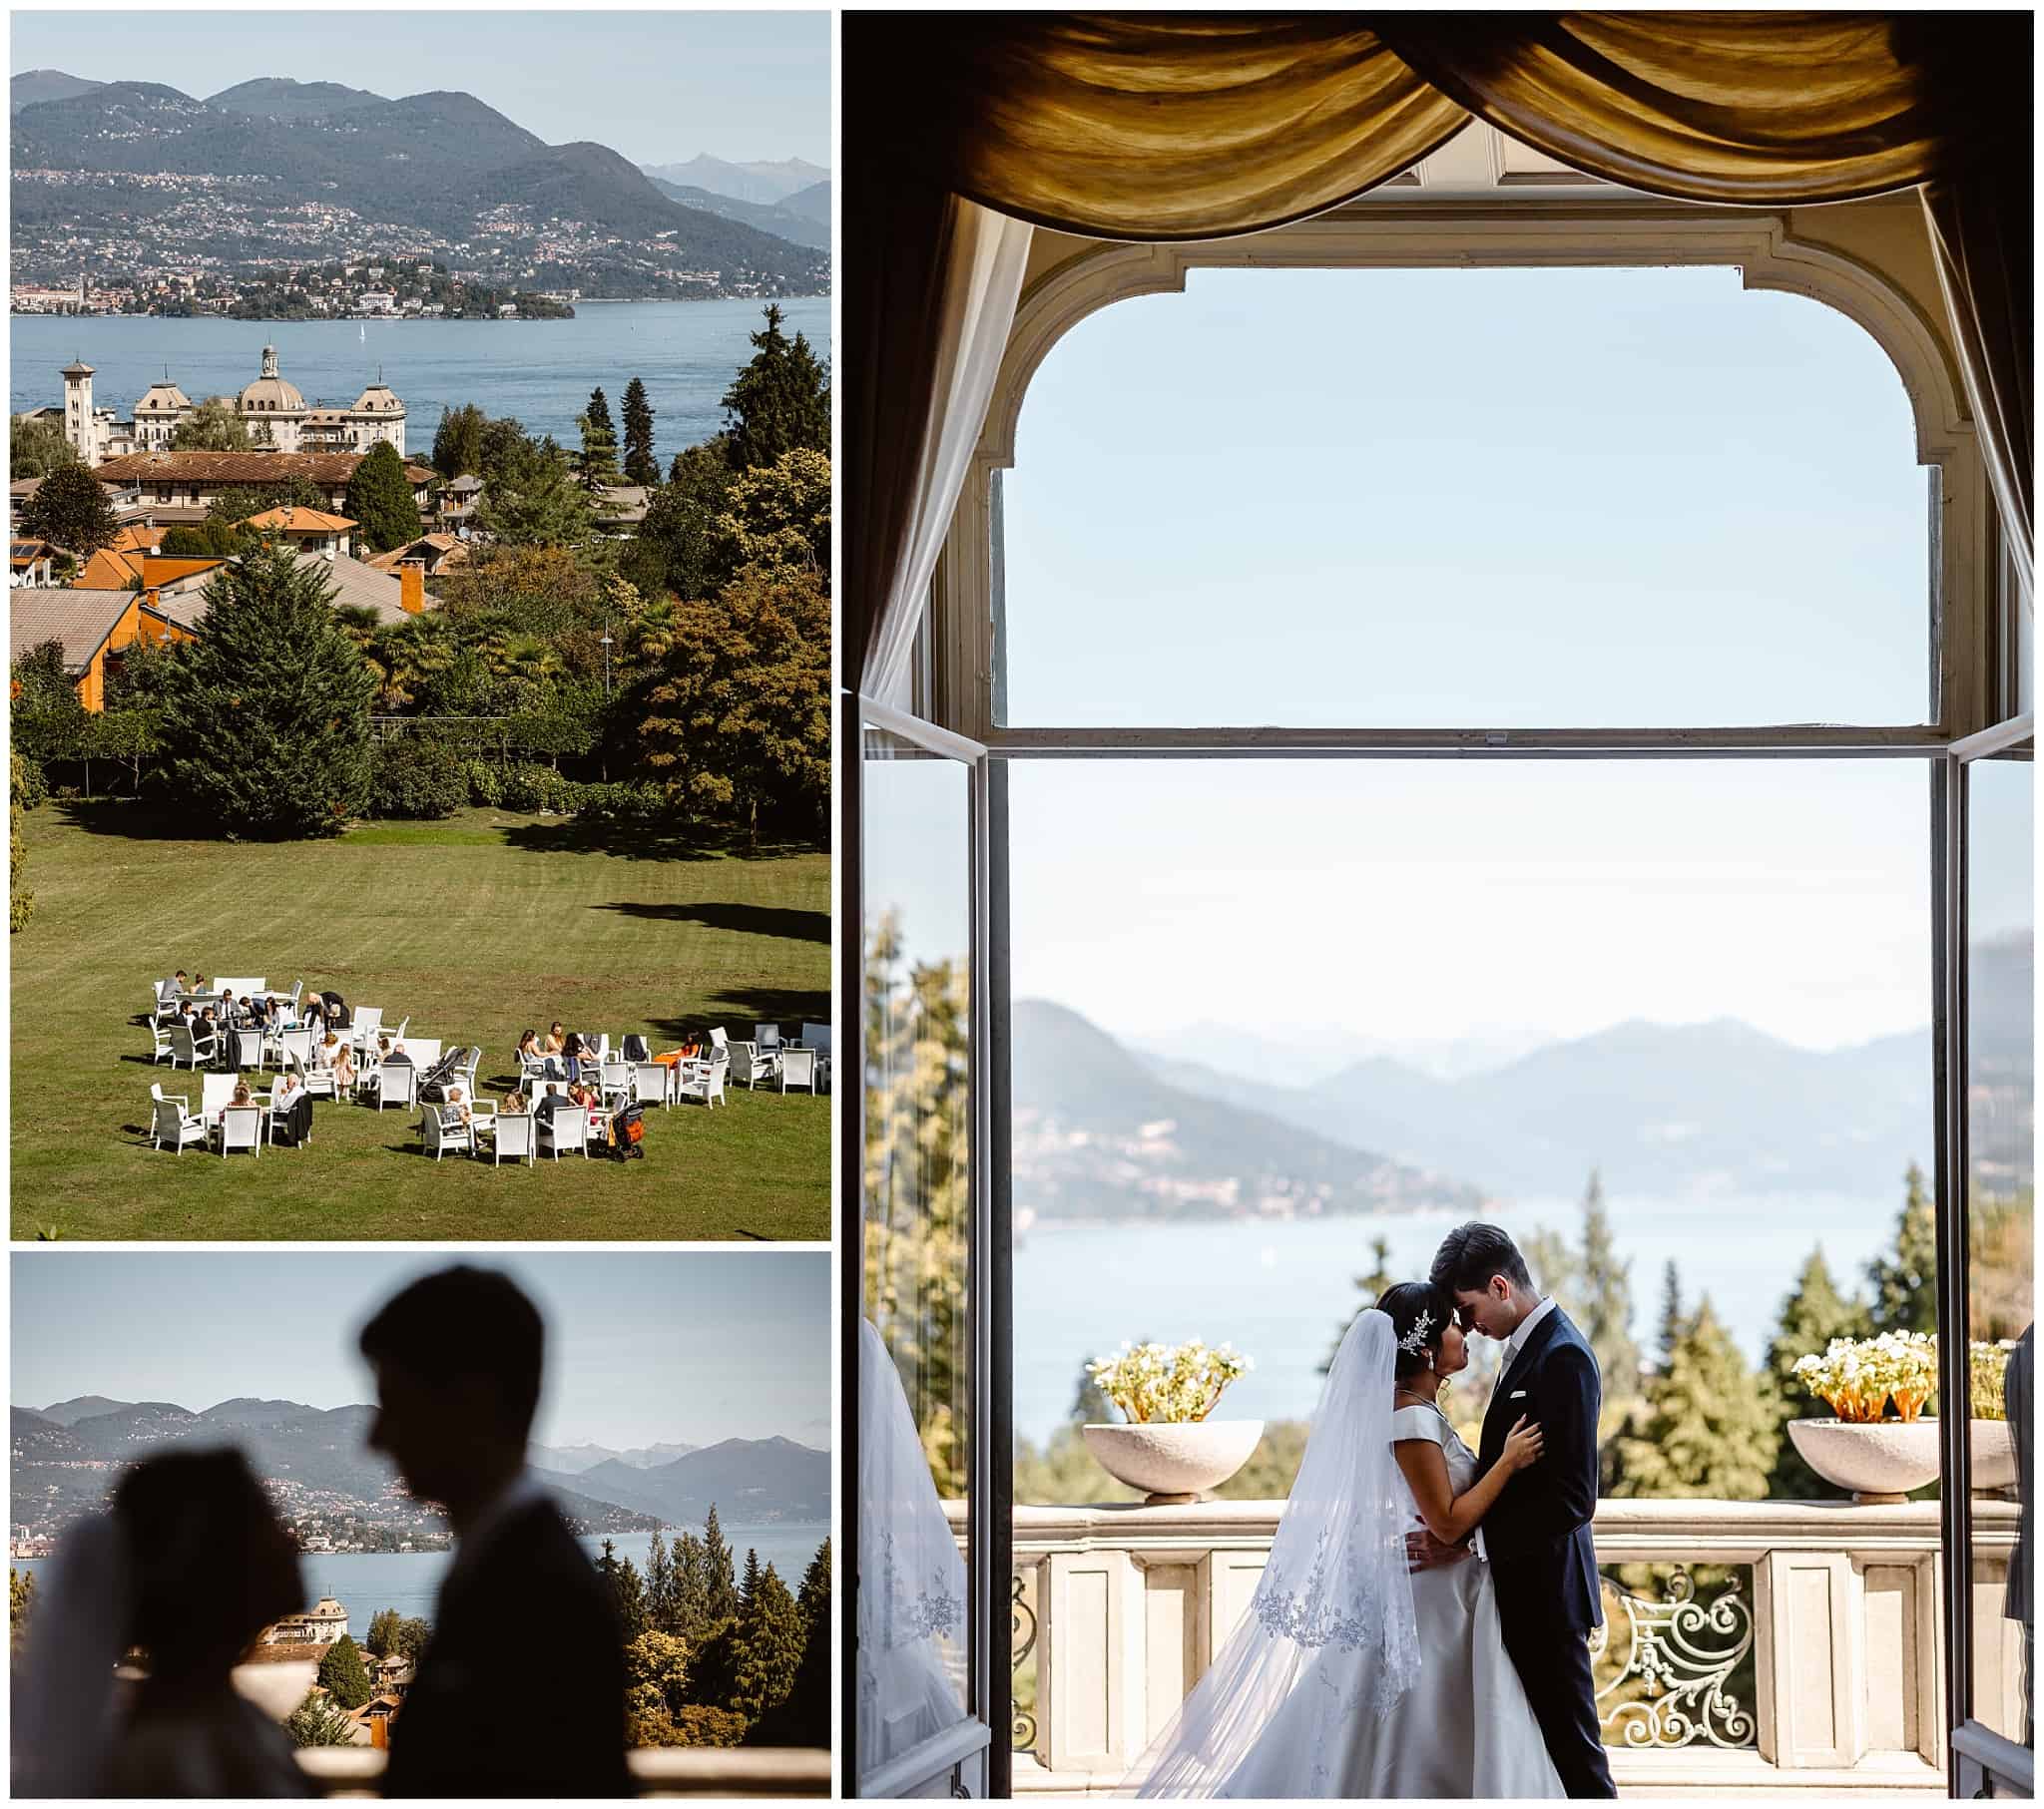 Lake Maggiore wedding at Villa Muggia, photographed by wedding photographers Ludovica & Valerio